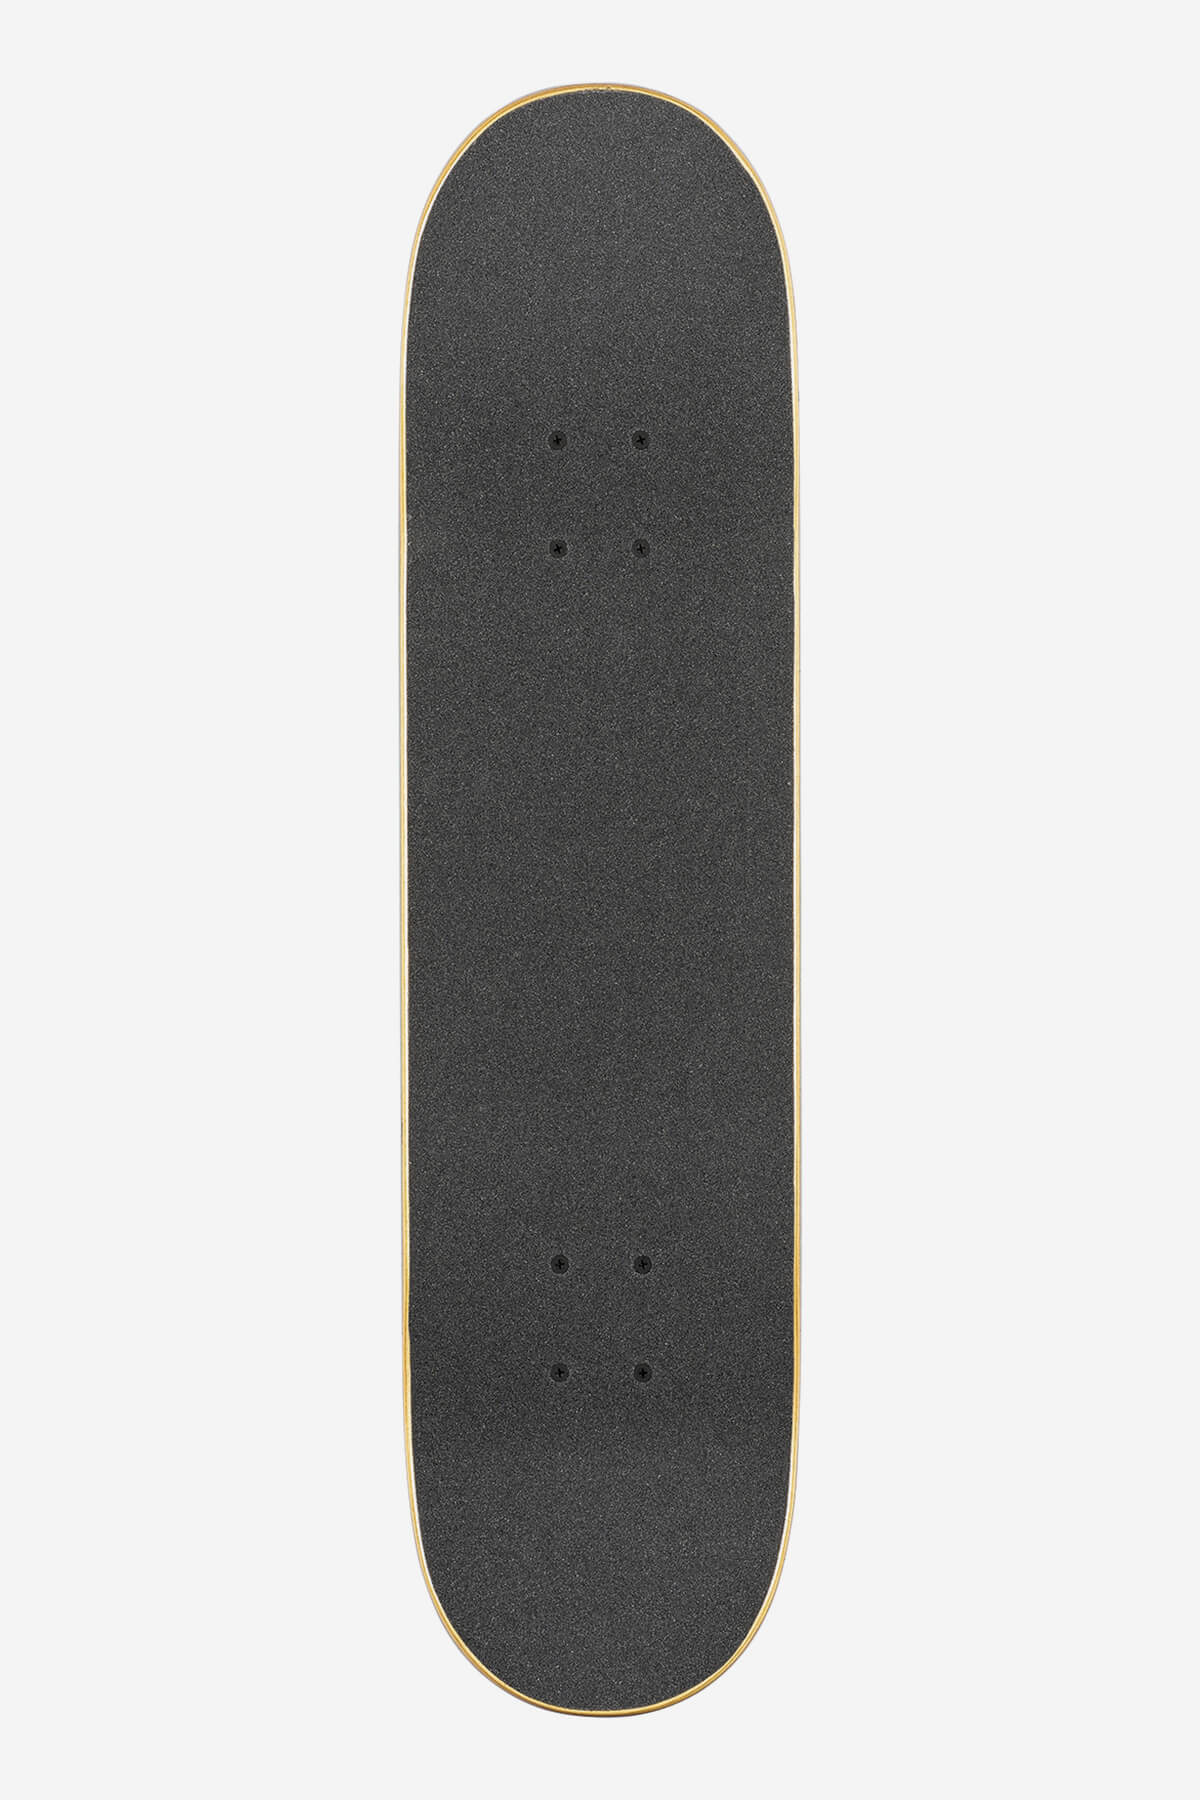 g1 full on tiger camo 8.0" complete skateboard